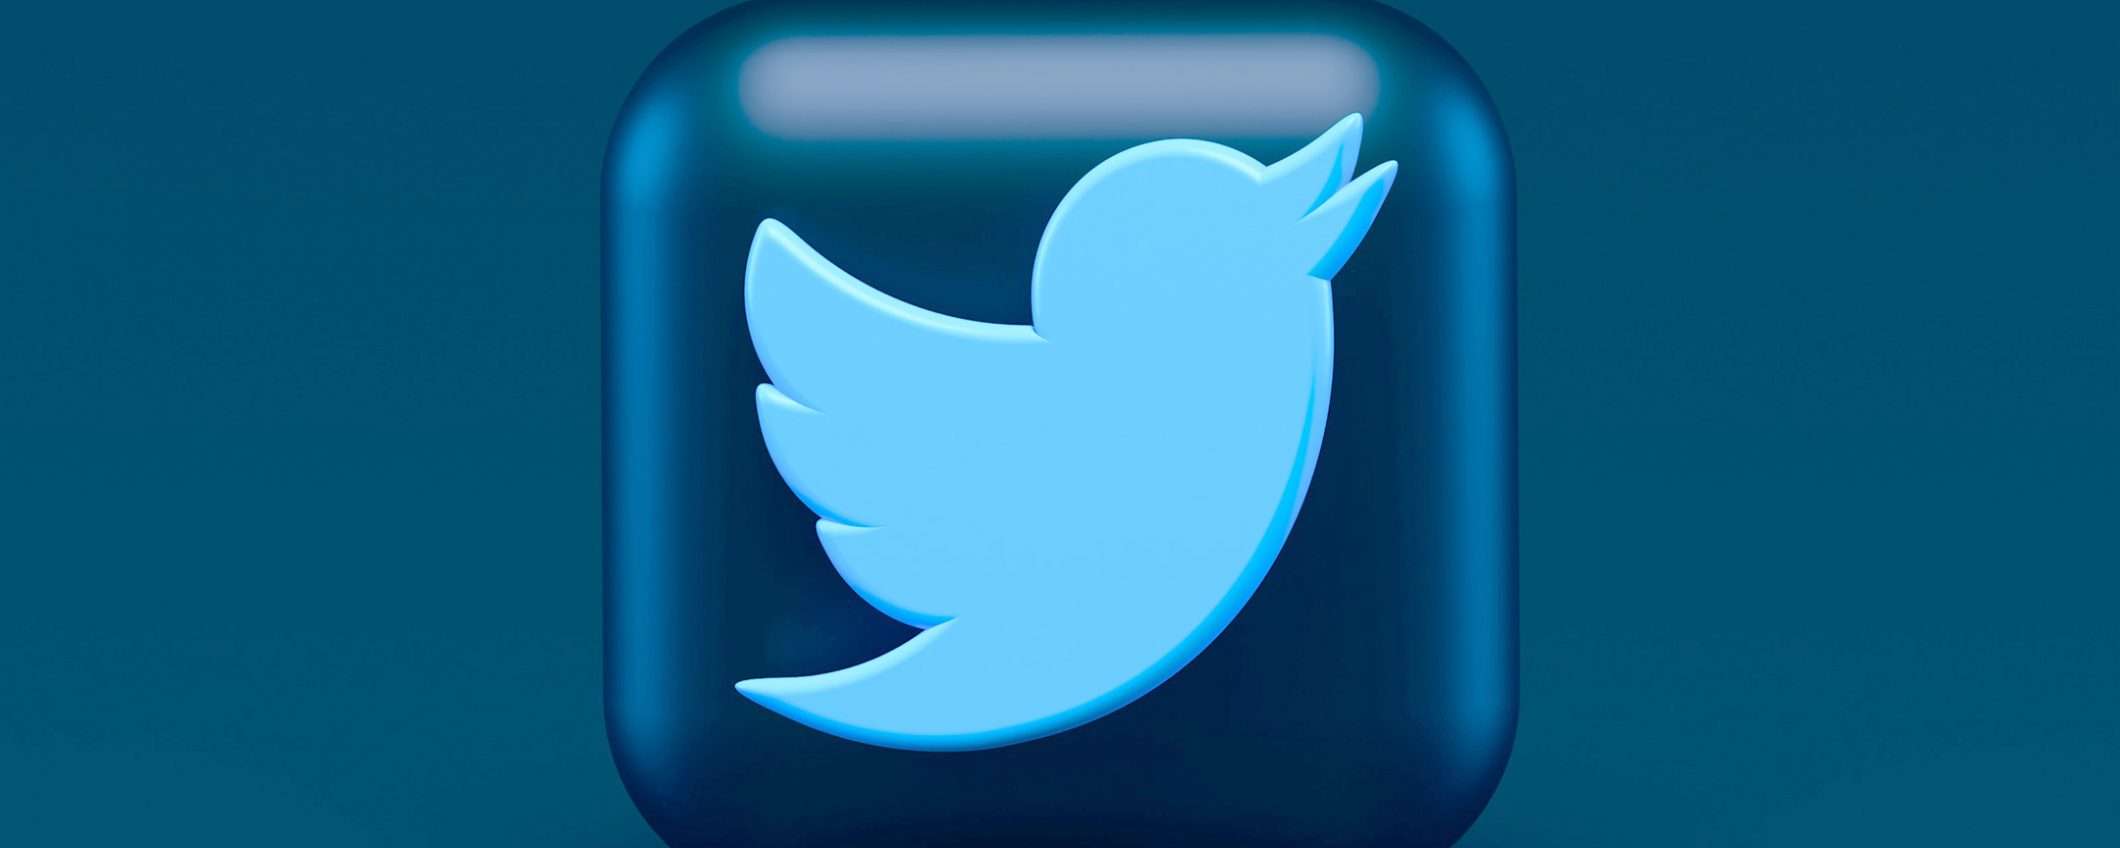 Twitter: nuova interfaccia per video brevi in stile TikTok